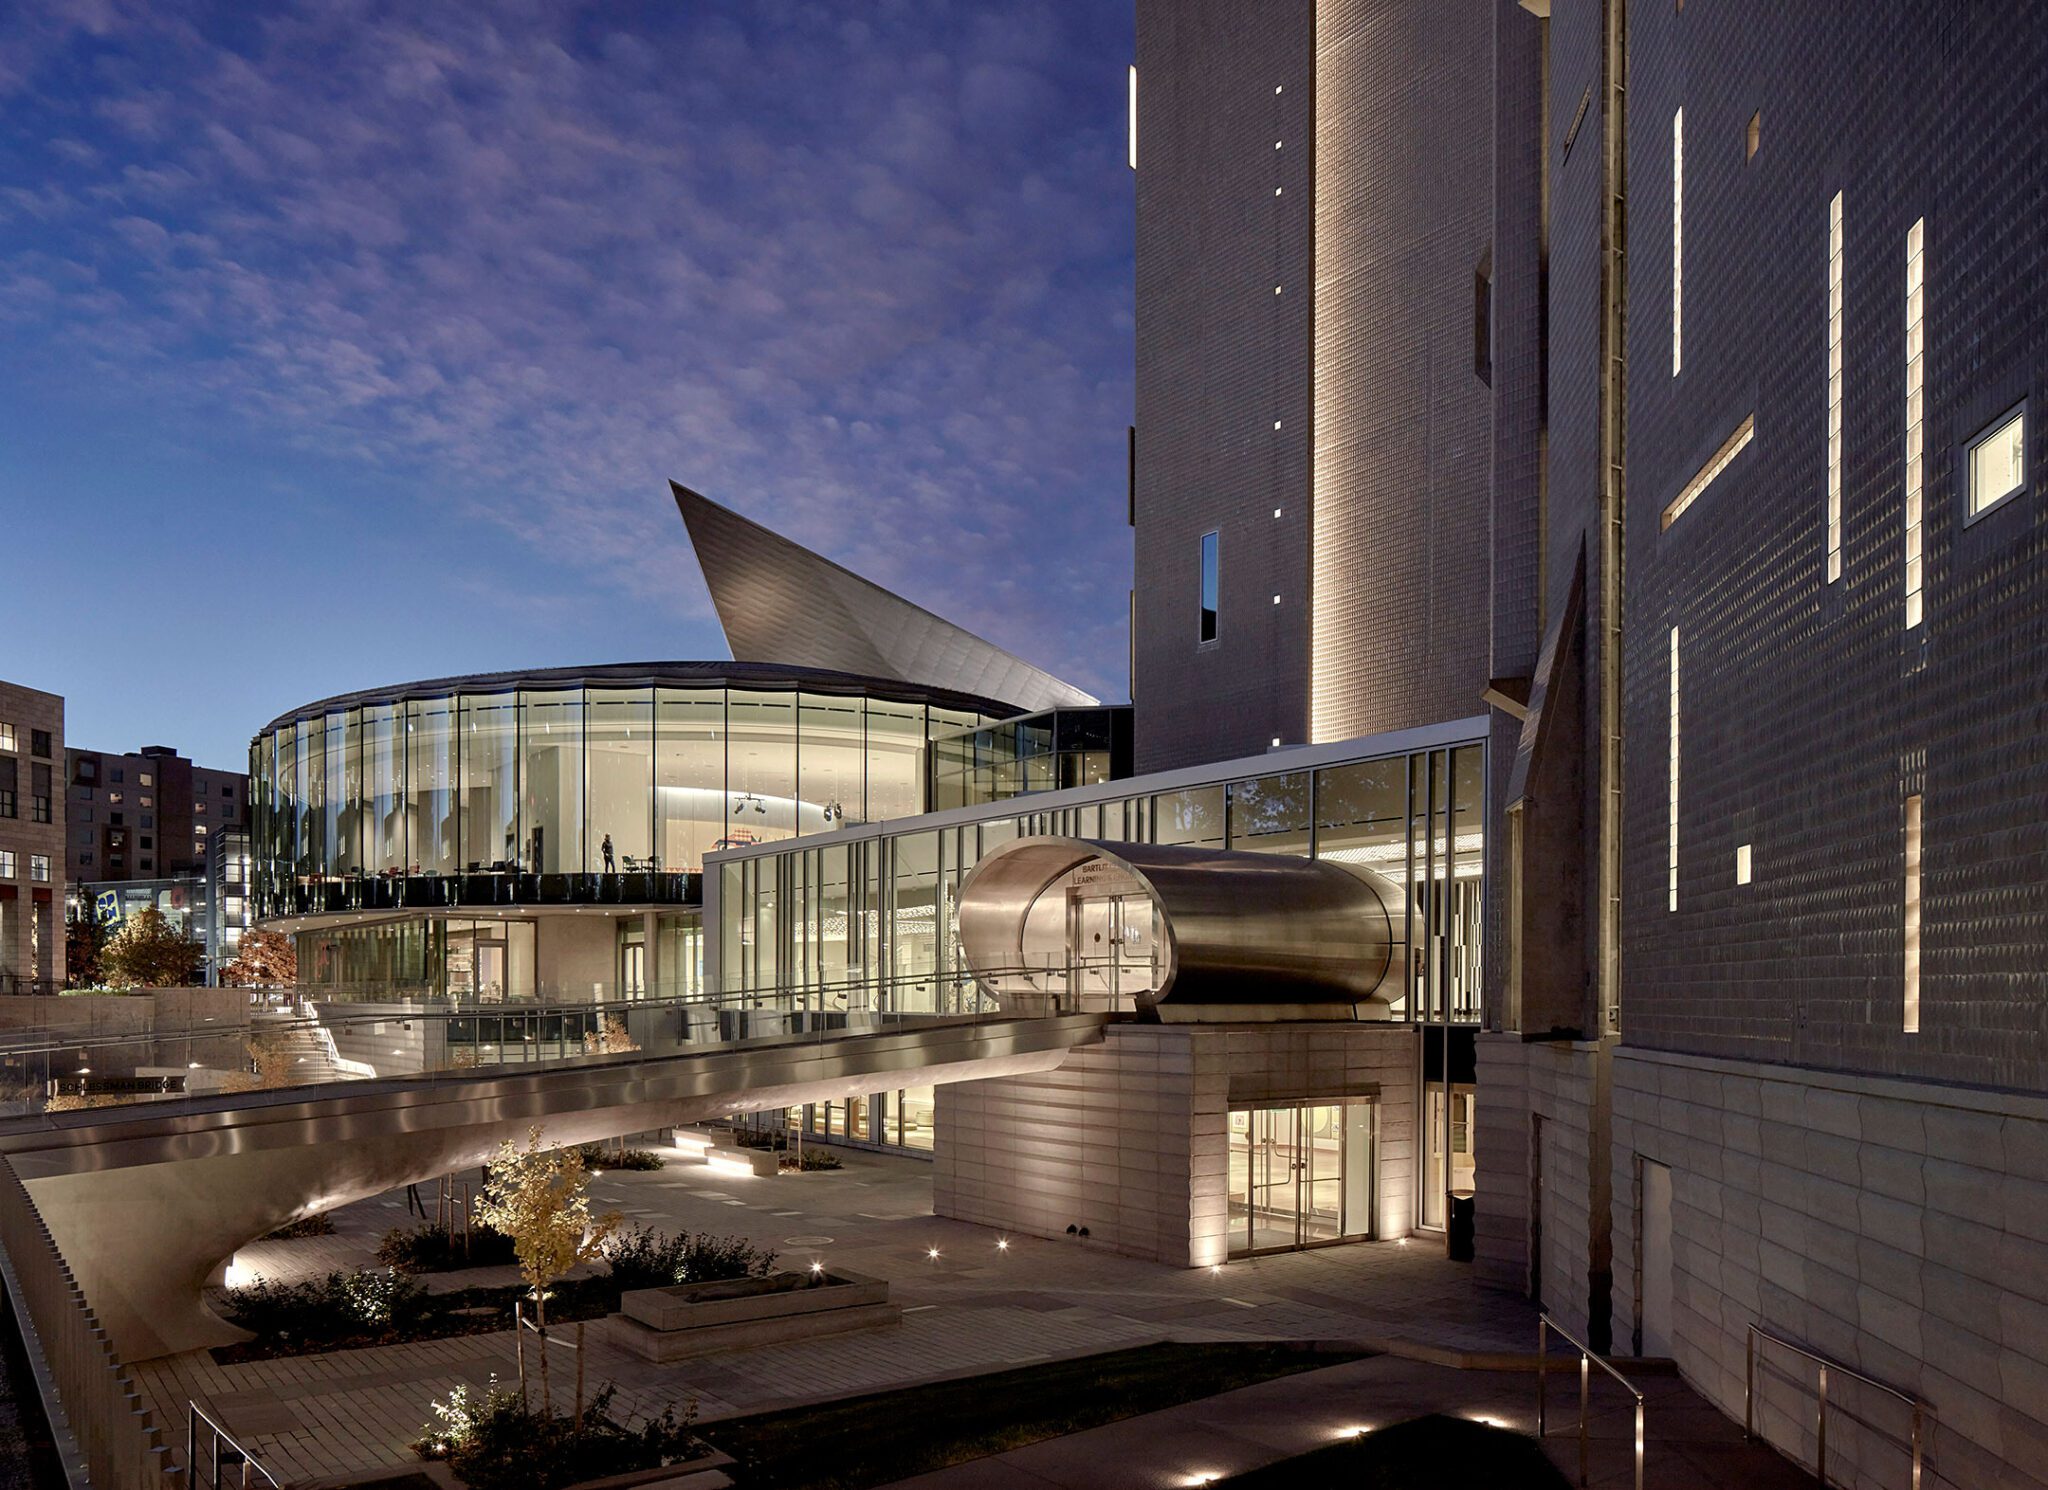 Denver Art Museum: Martin Building Renovation + Sie Welcome Center Image